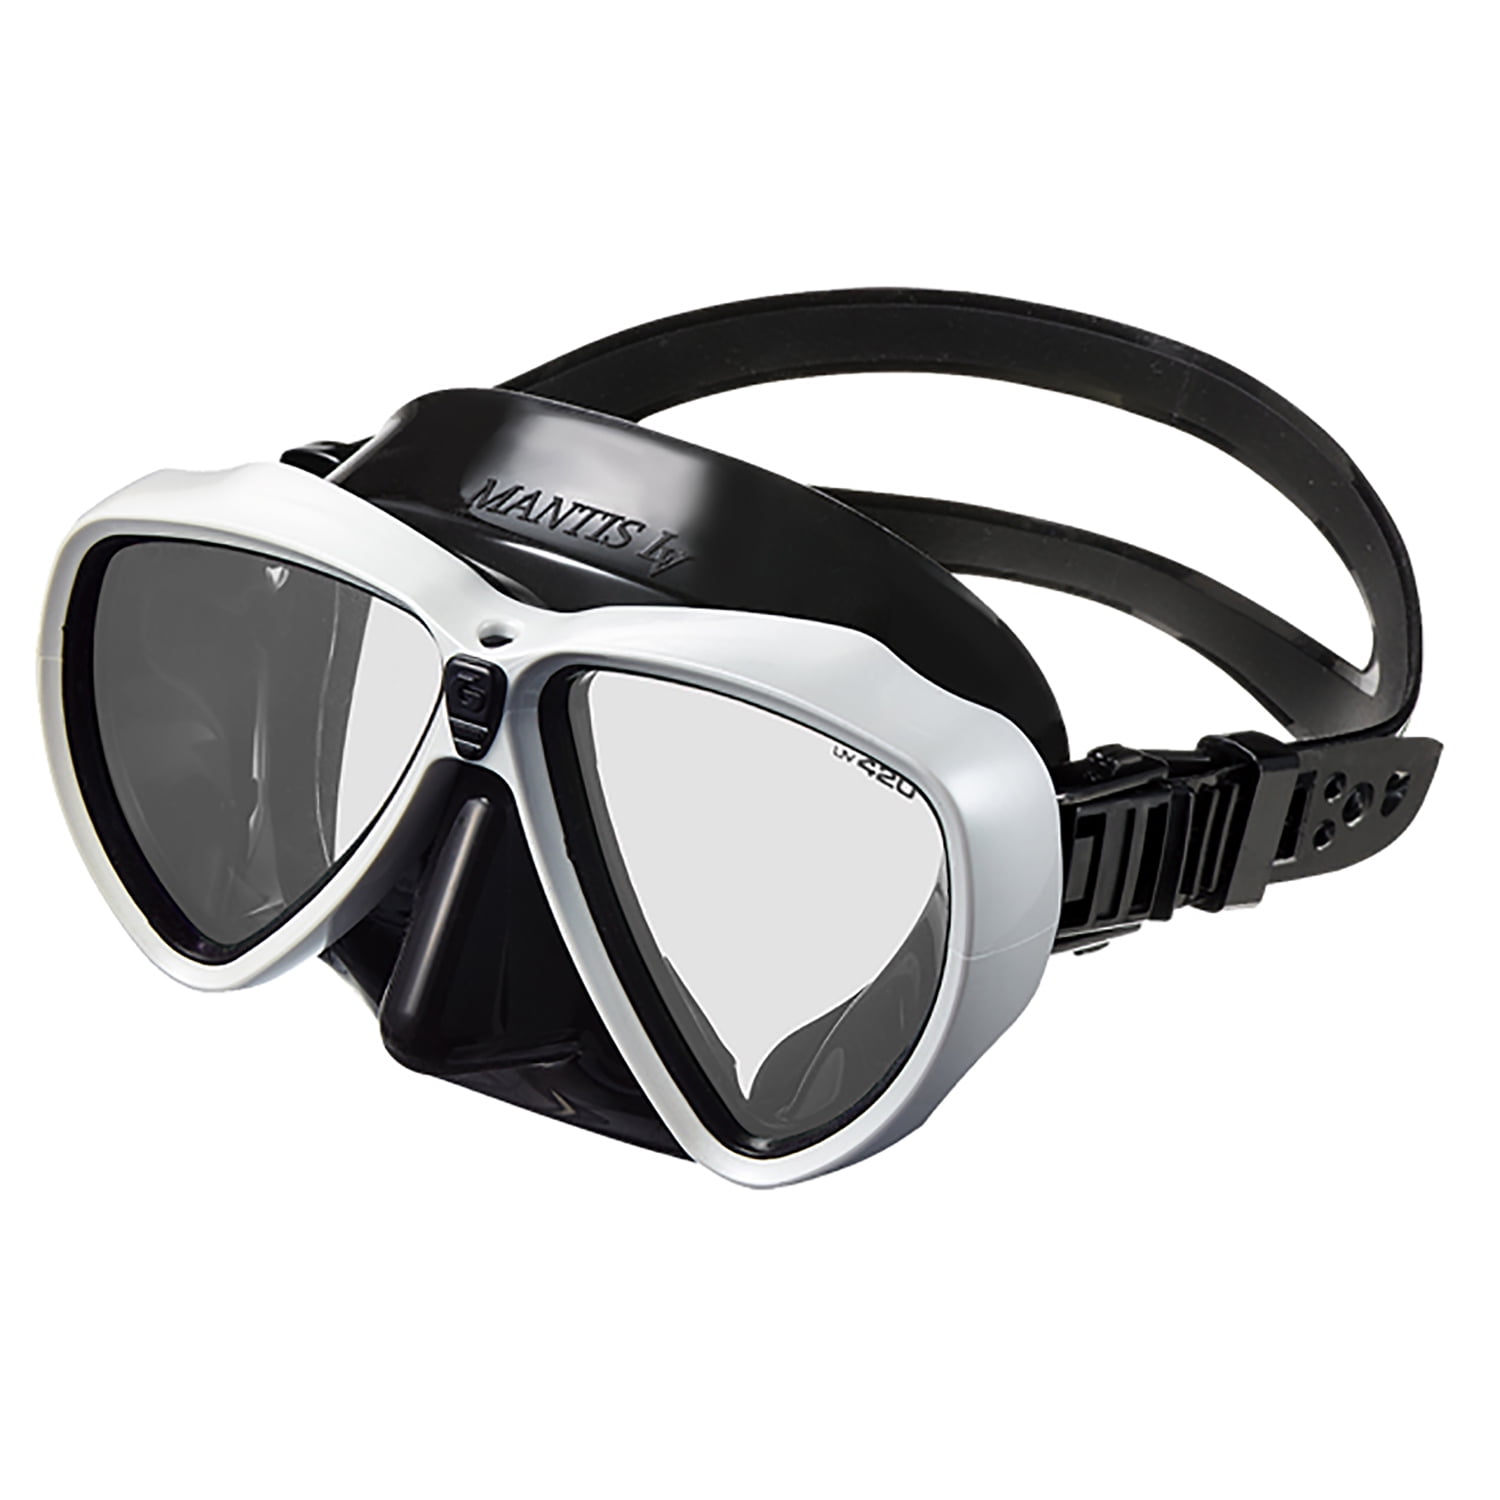 Gull Mantis LV RX Nearsighted Black/Glass White Dive Mask, RX-1.5 